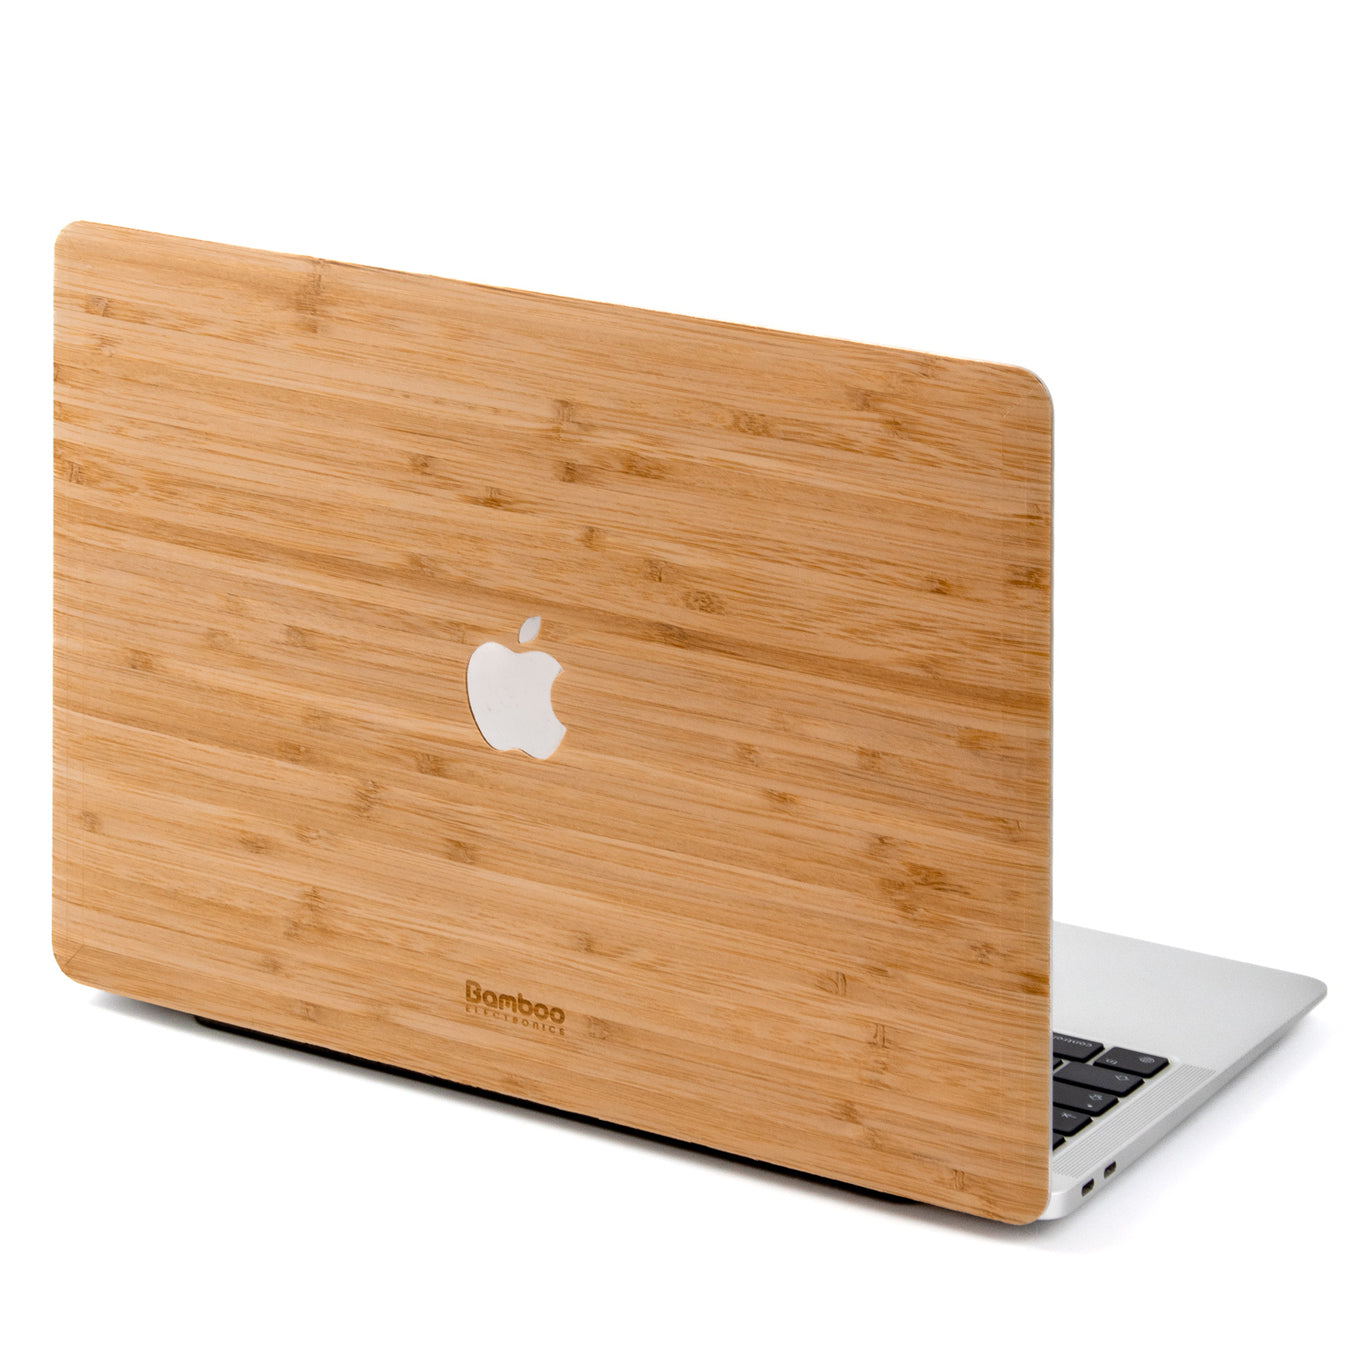 Cover MacBook MacBook 13 inch adhesive wood cover